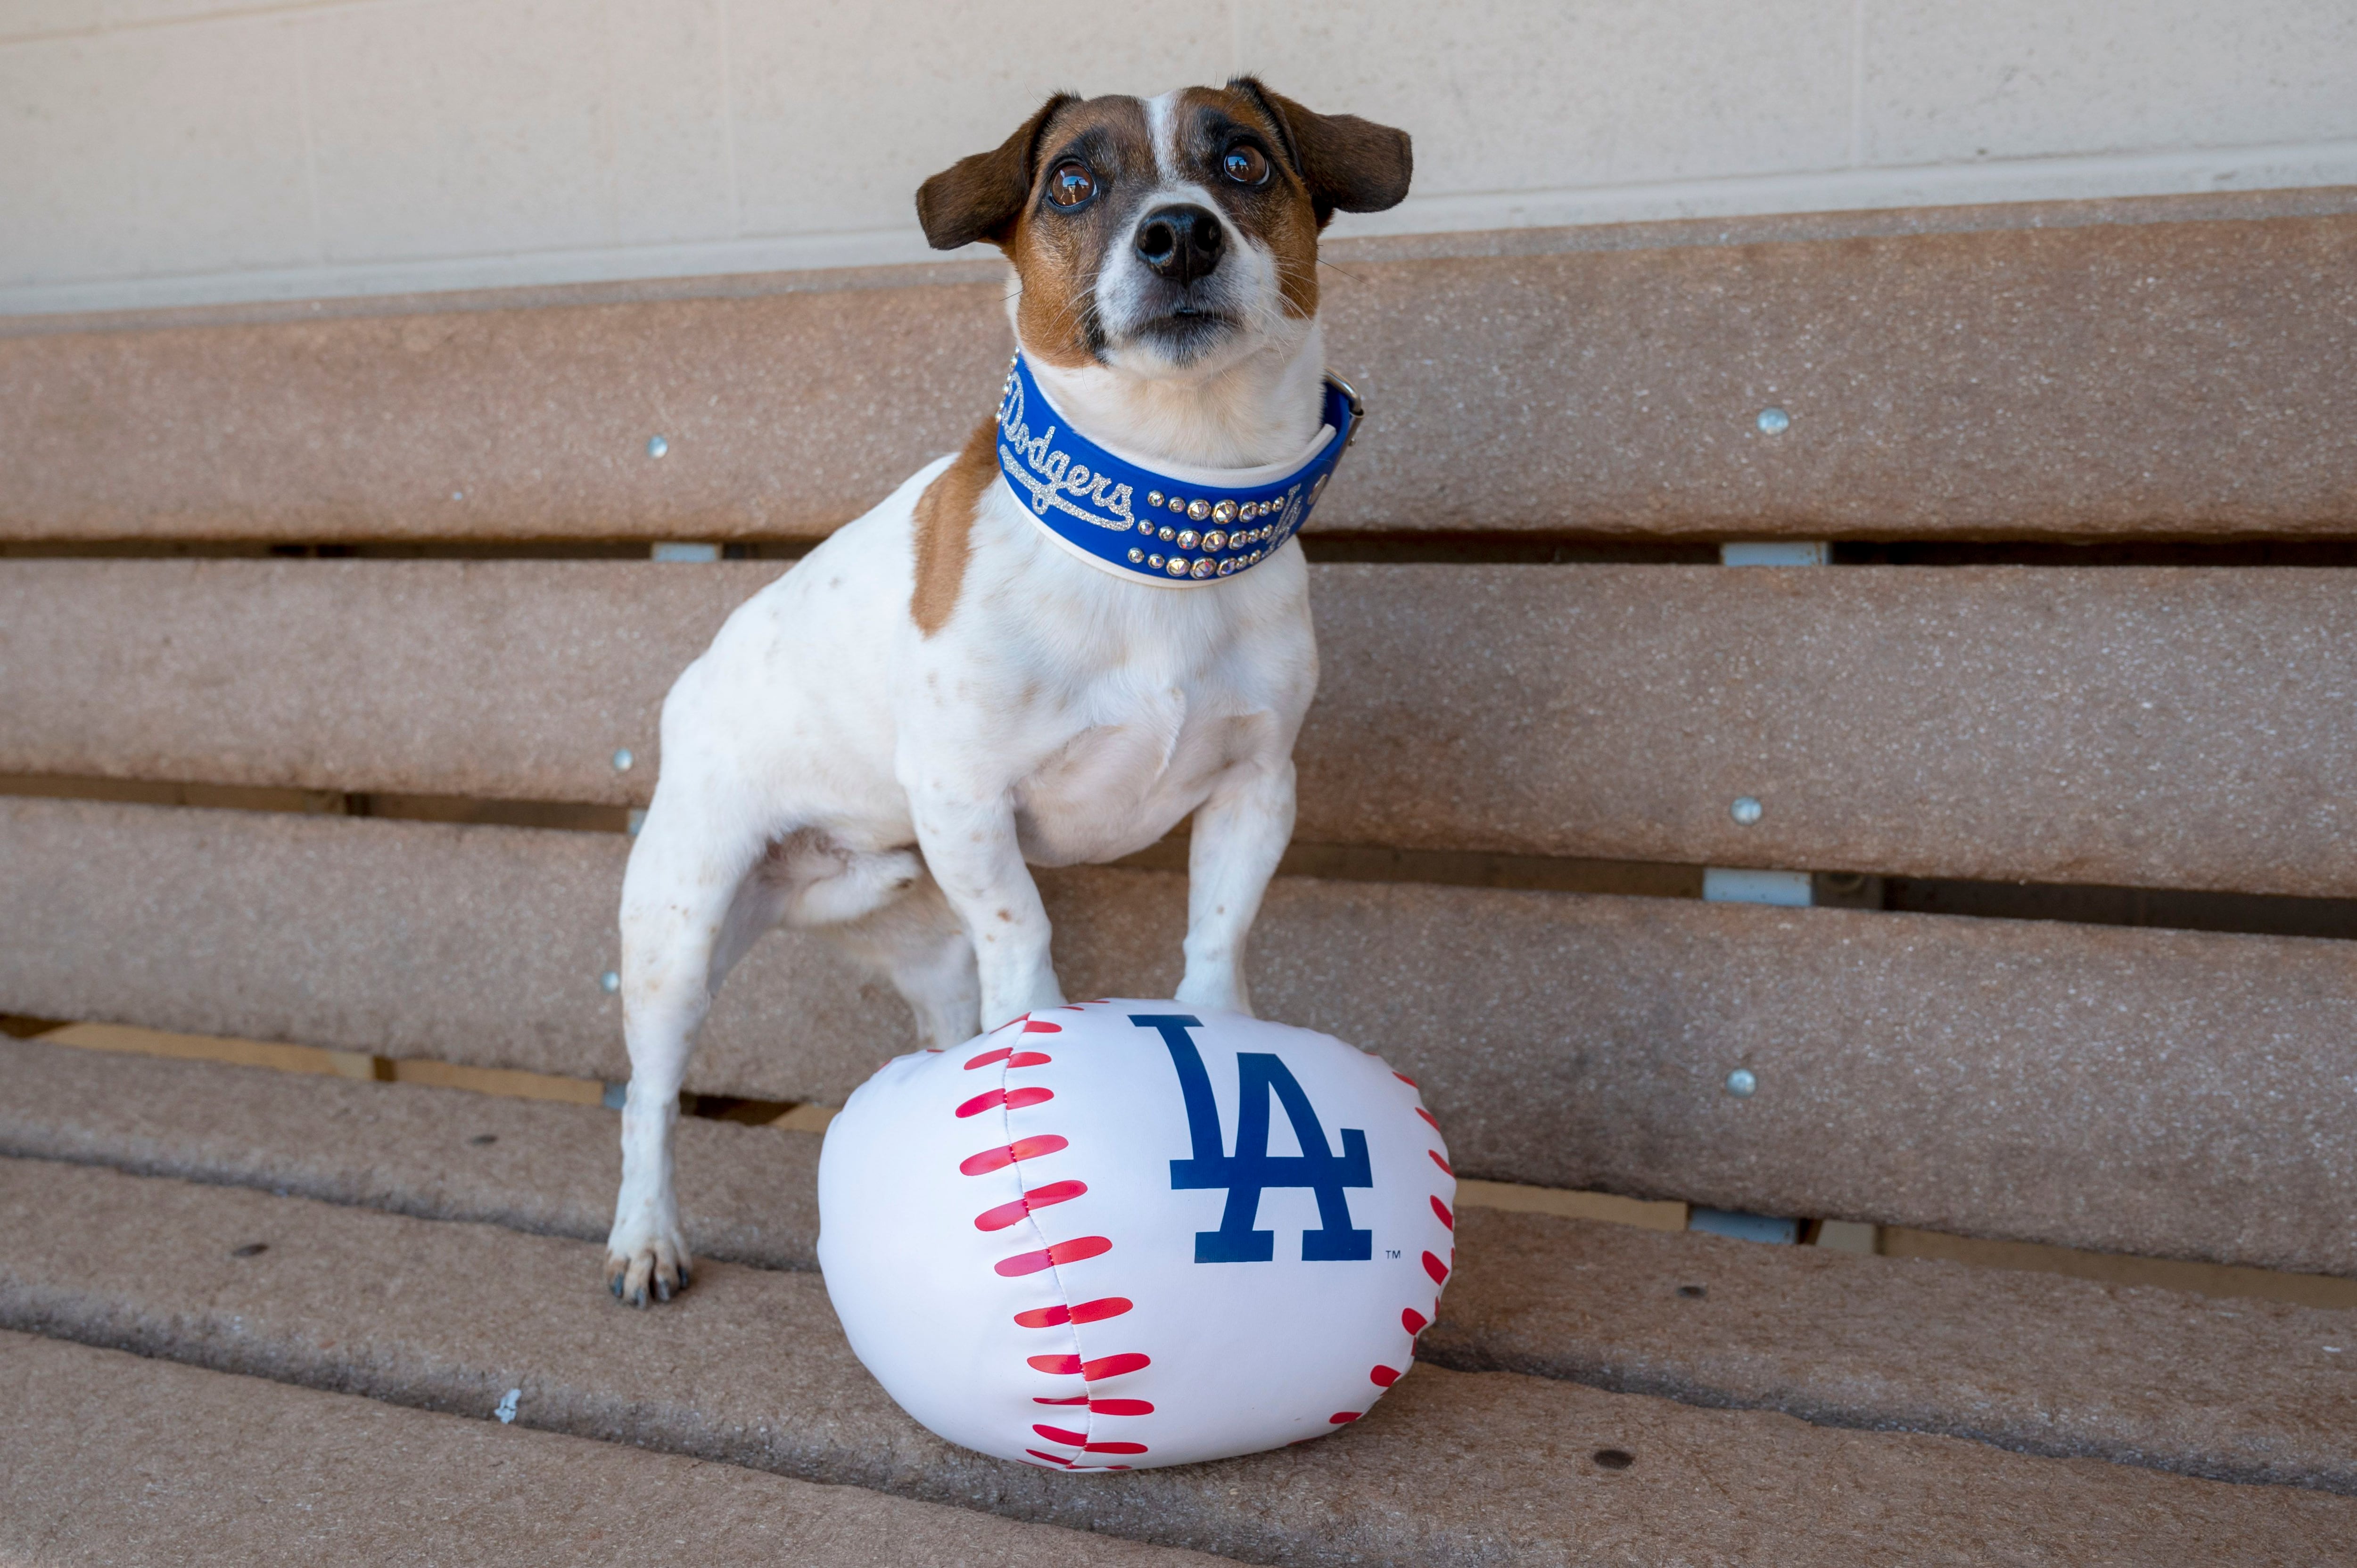 Fast little legs: Russell Terrier Macho declared fastest doggie baserunner  at Dodger Stadium – WSB-TV Channel 2 - Atlanta